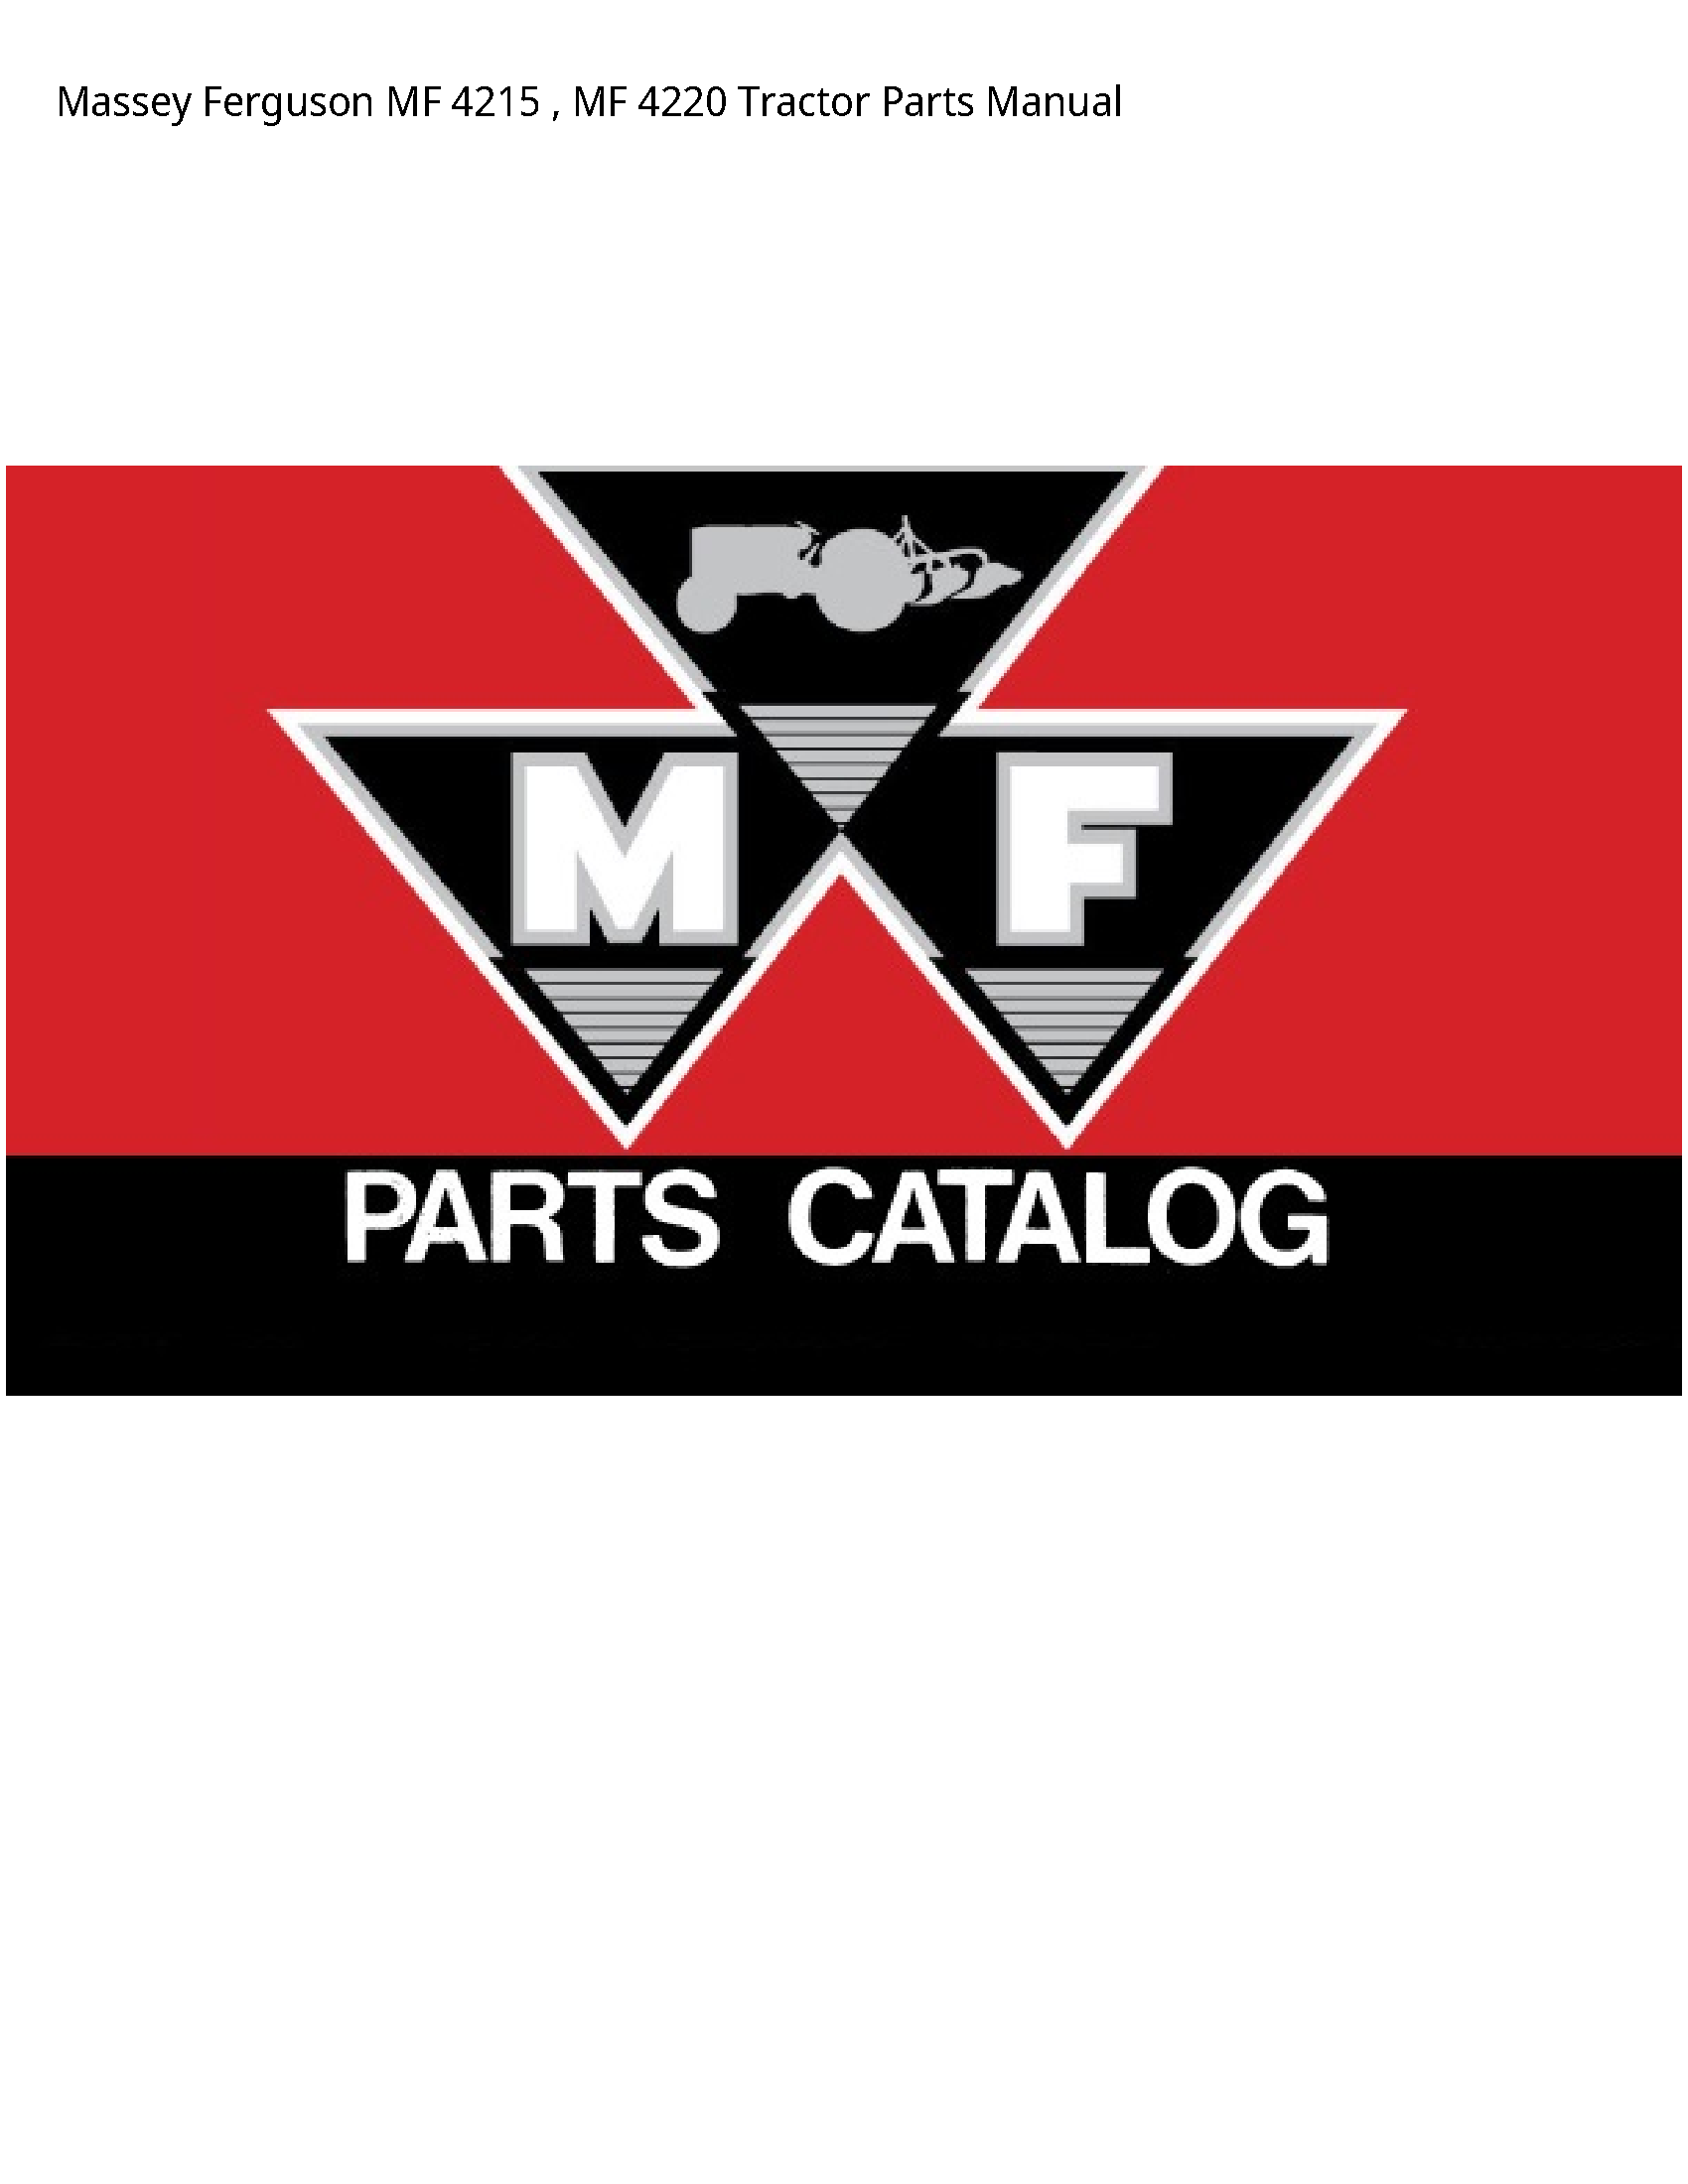 Massey Ferguson 4215 MF MF Tractor Parts manual